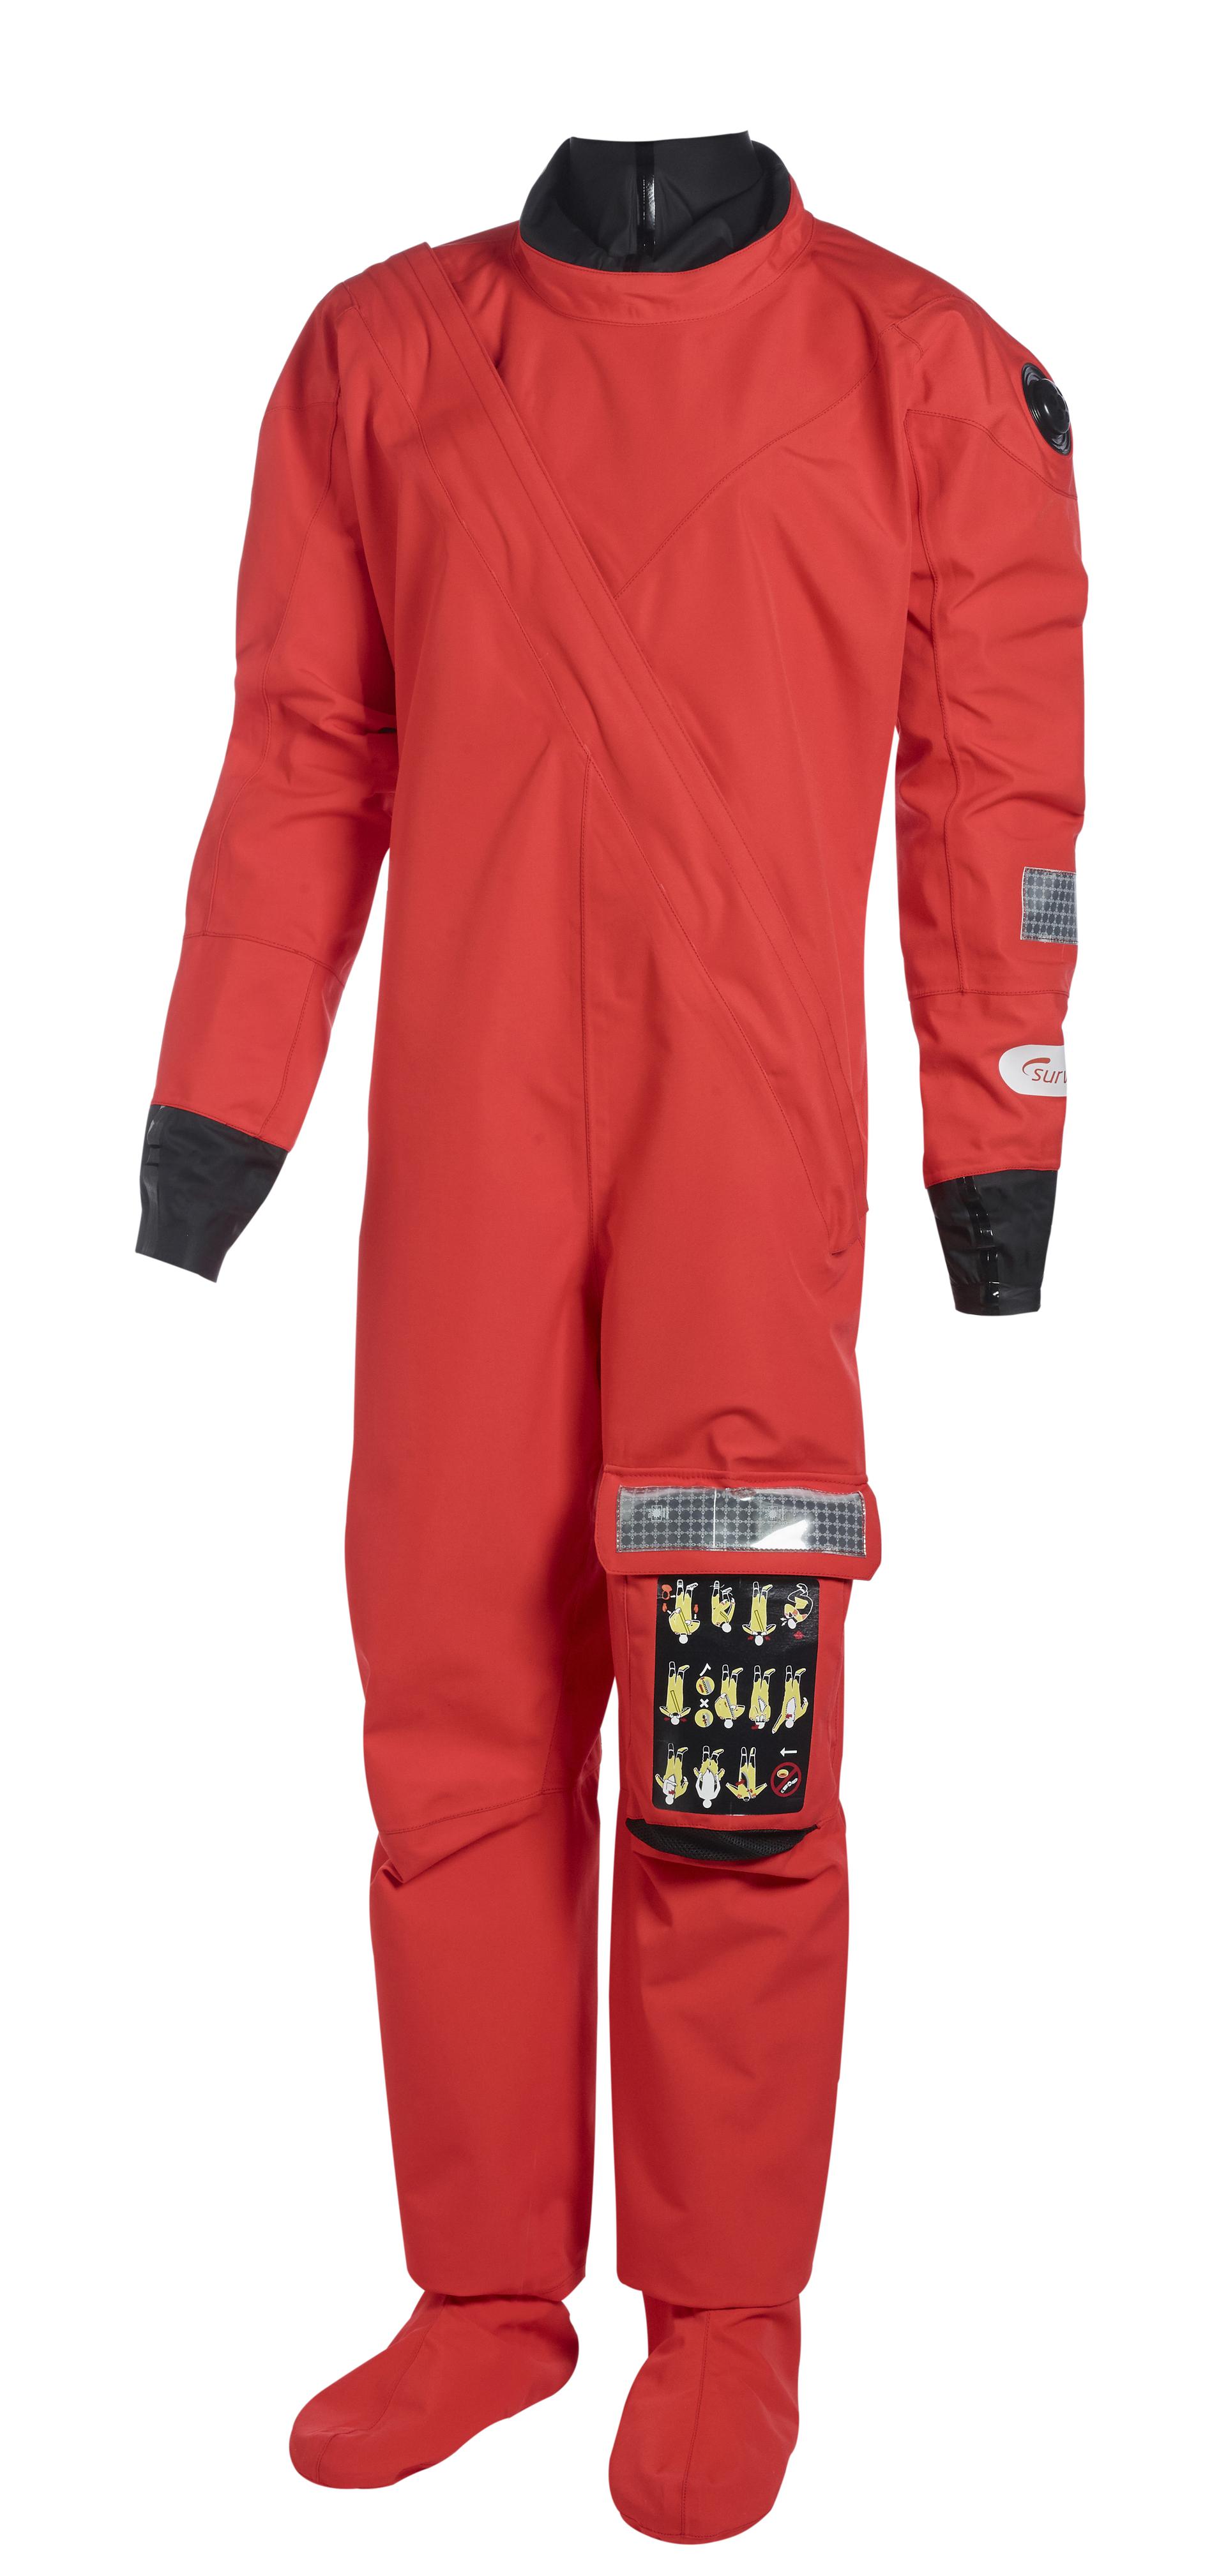 Survitec 1300 Series training immersion suit